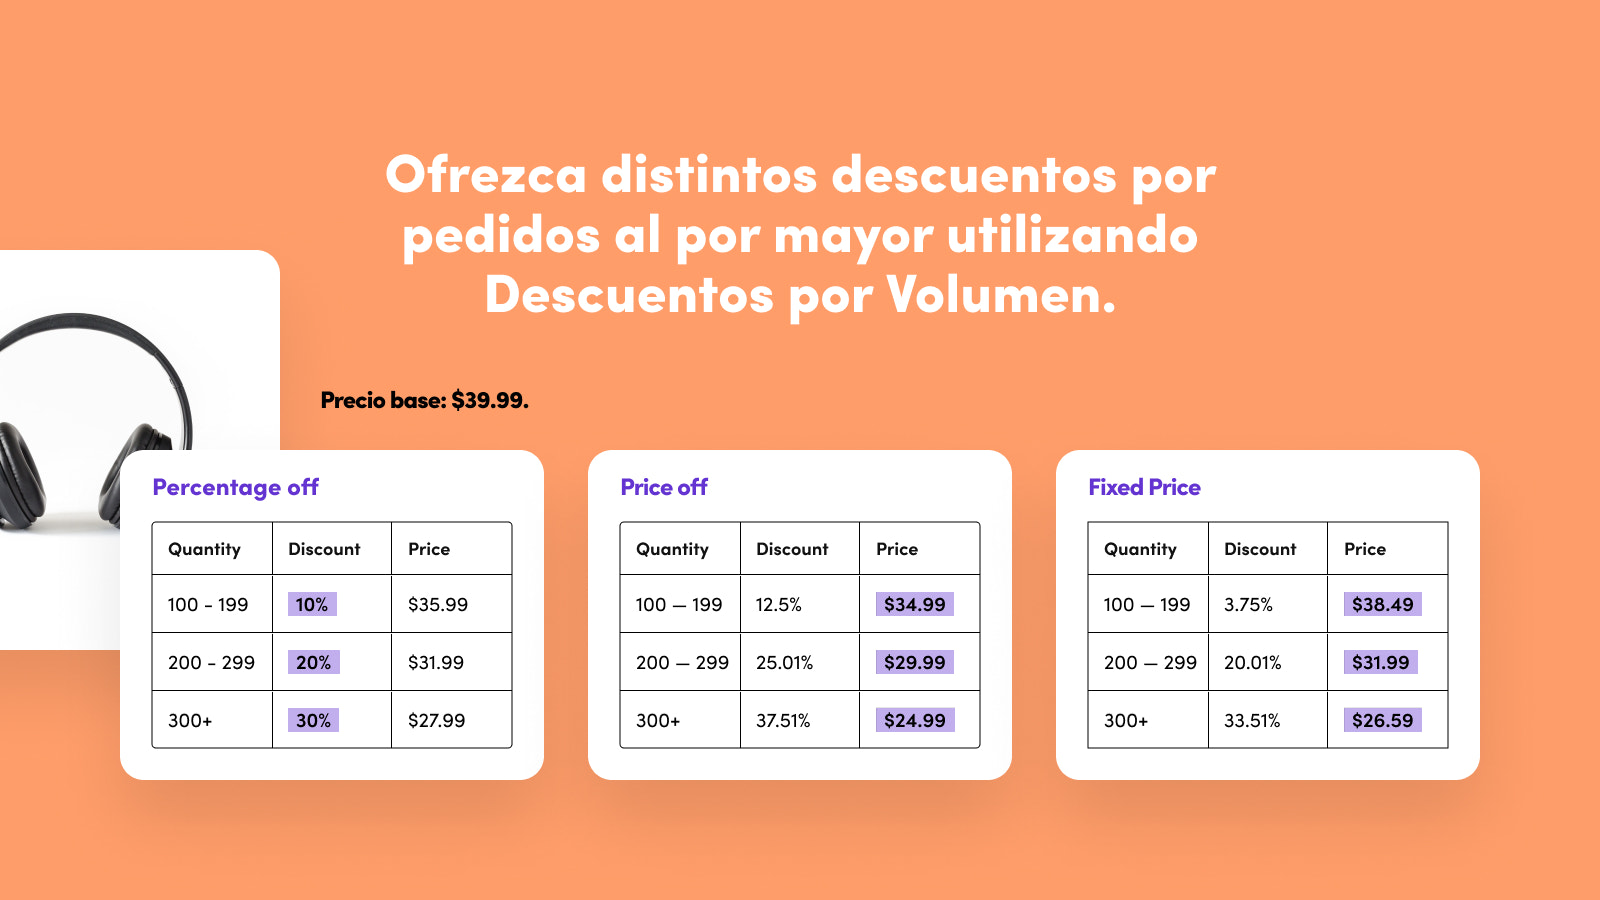 Offer different bulk order discounts using Volume Discounts